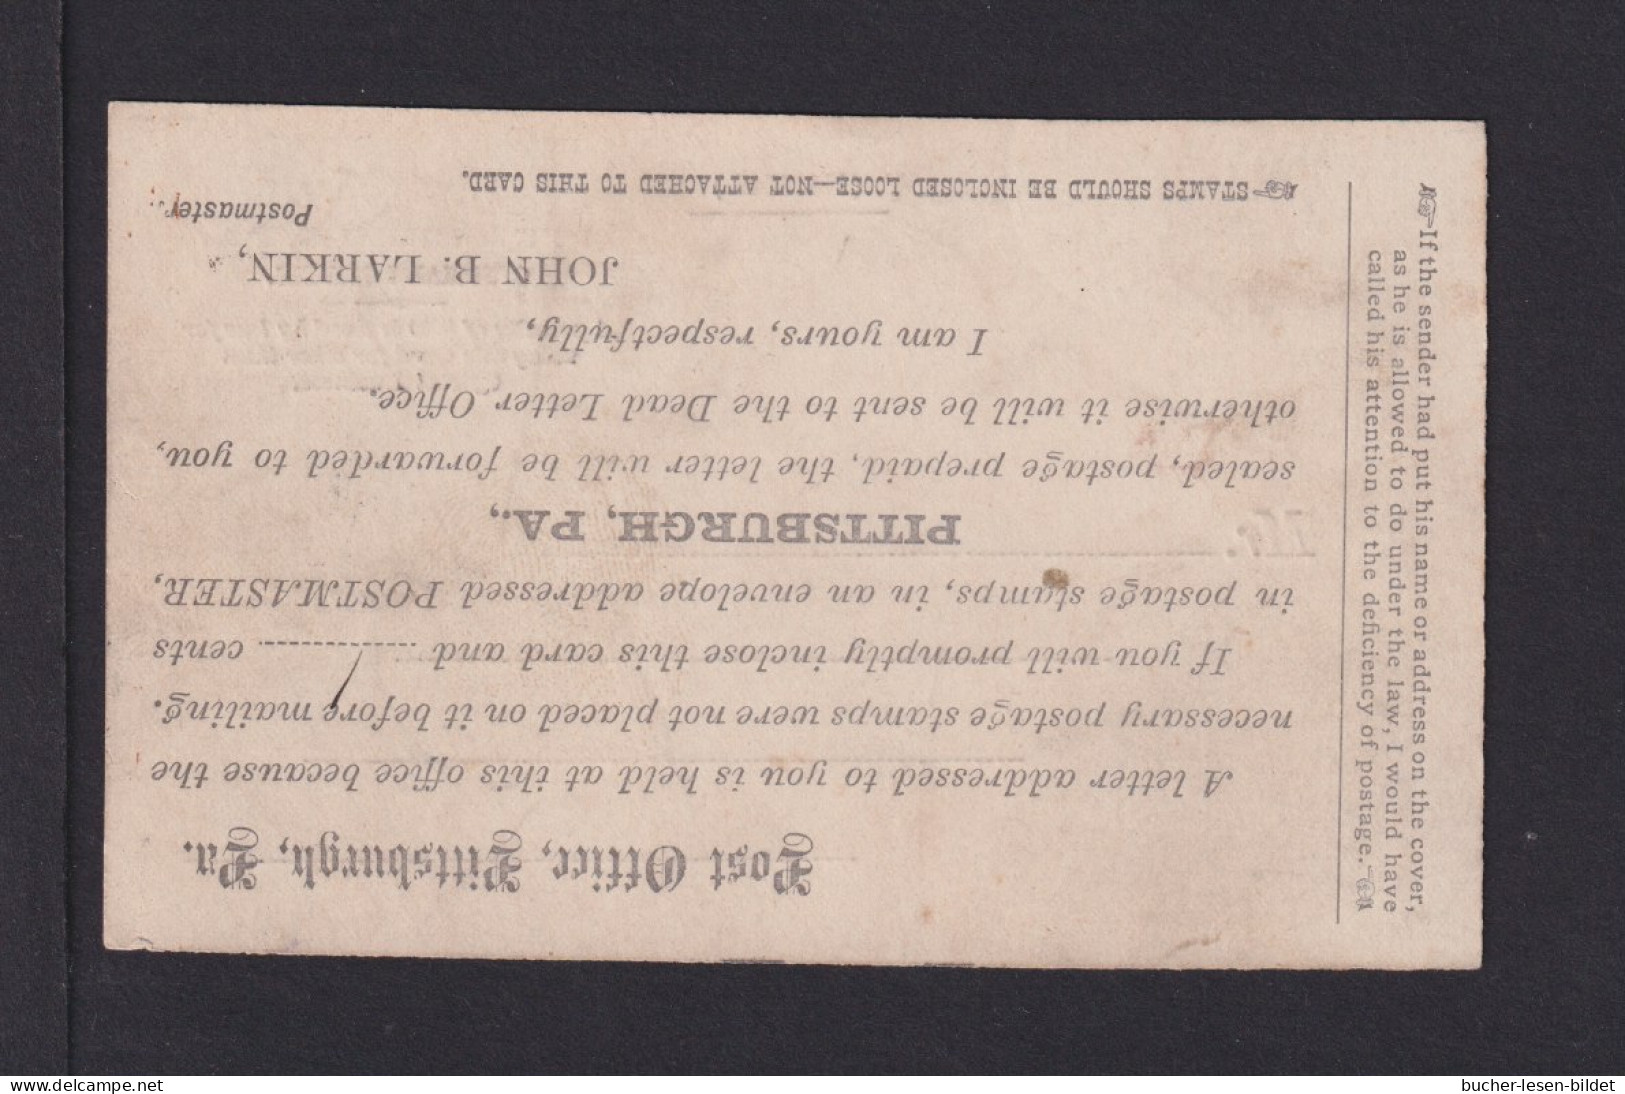 1887 - Portofreie Dienstkarte "Post Office" In Pittsbourgh  - Lettres & Documents